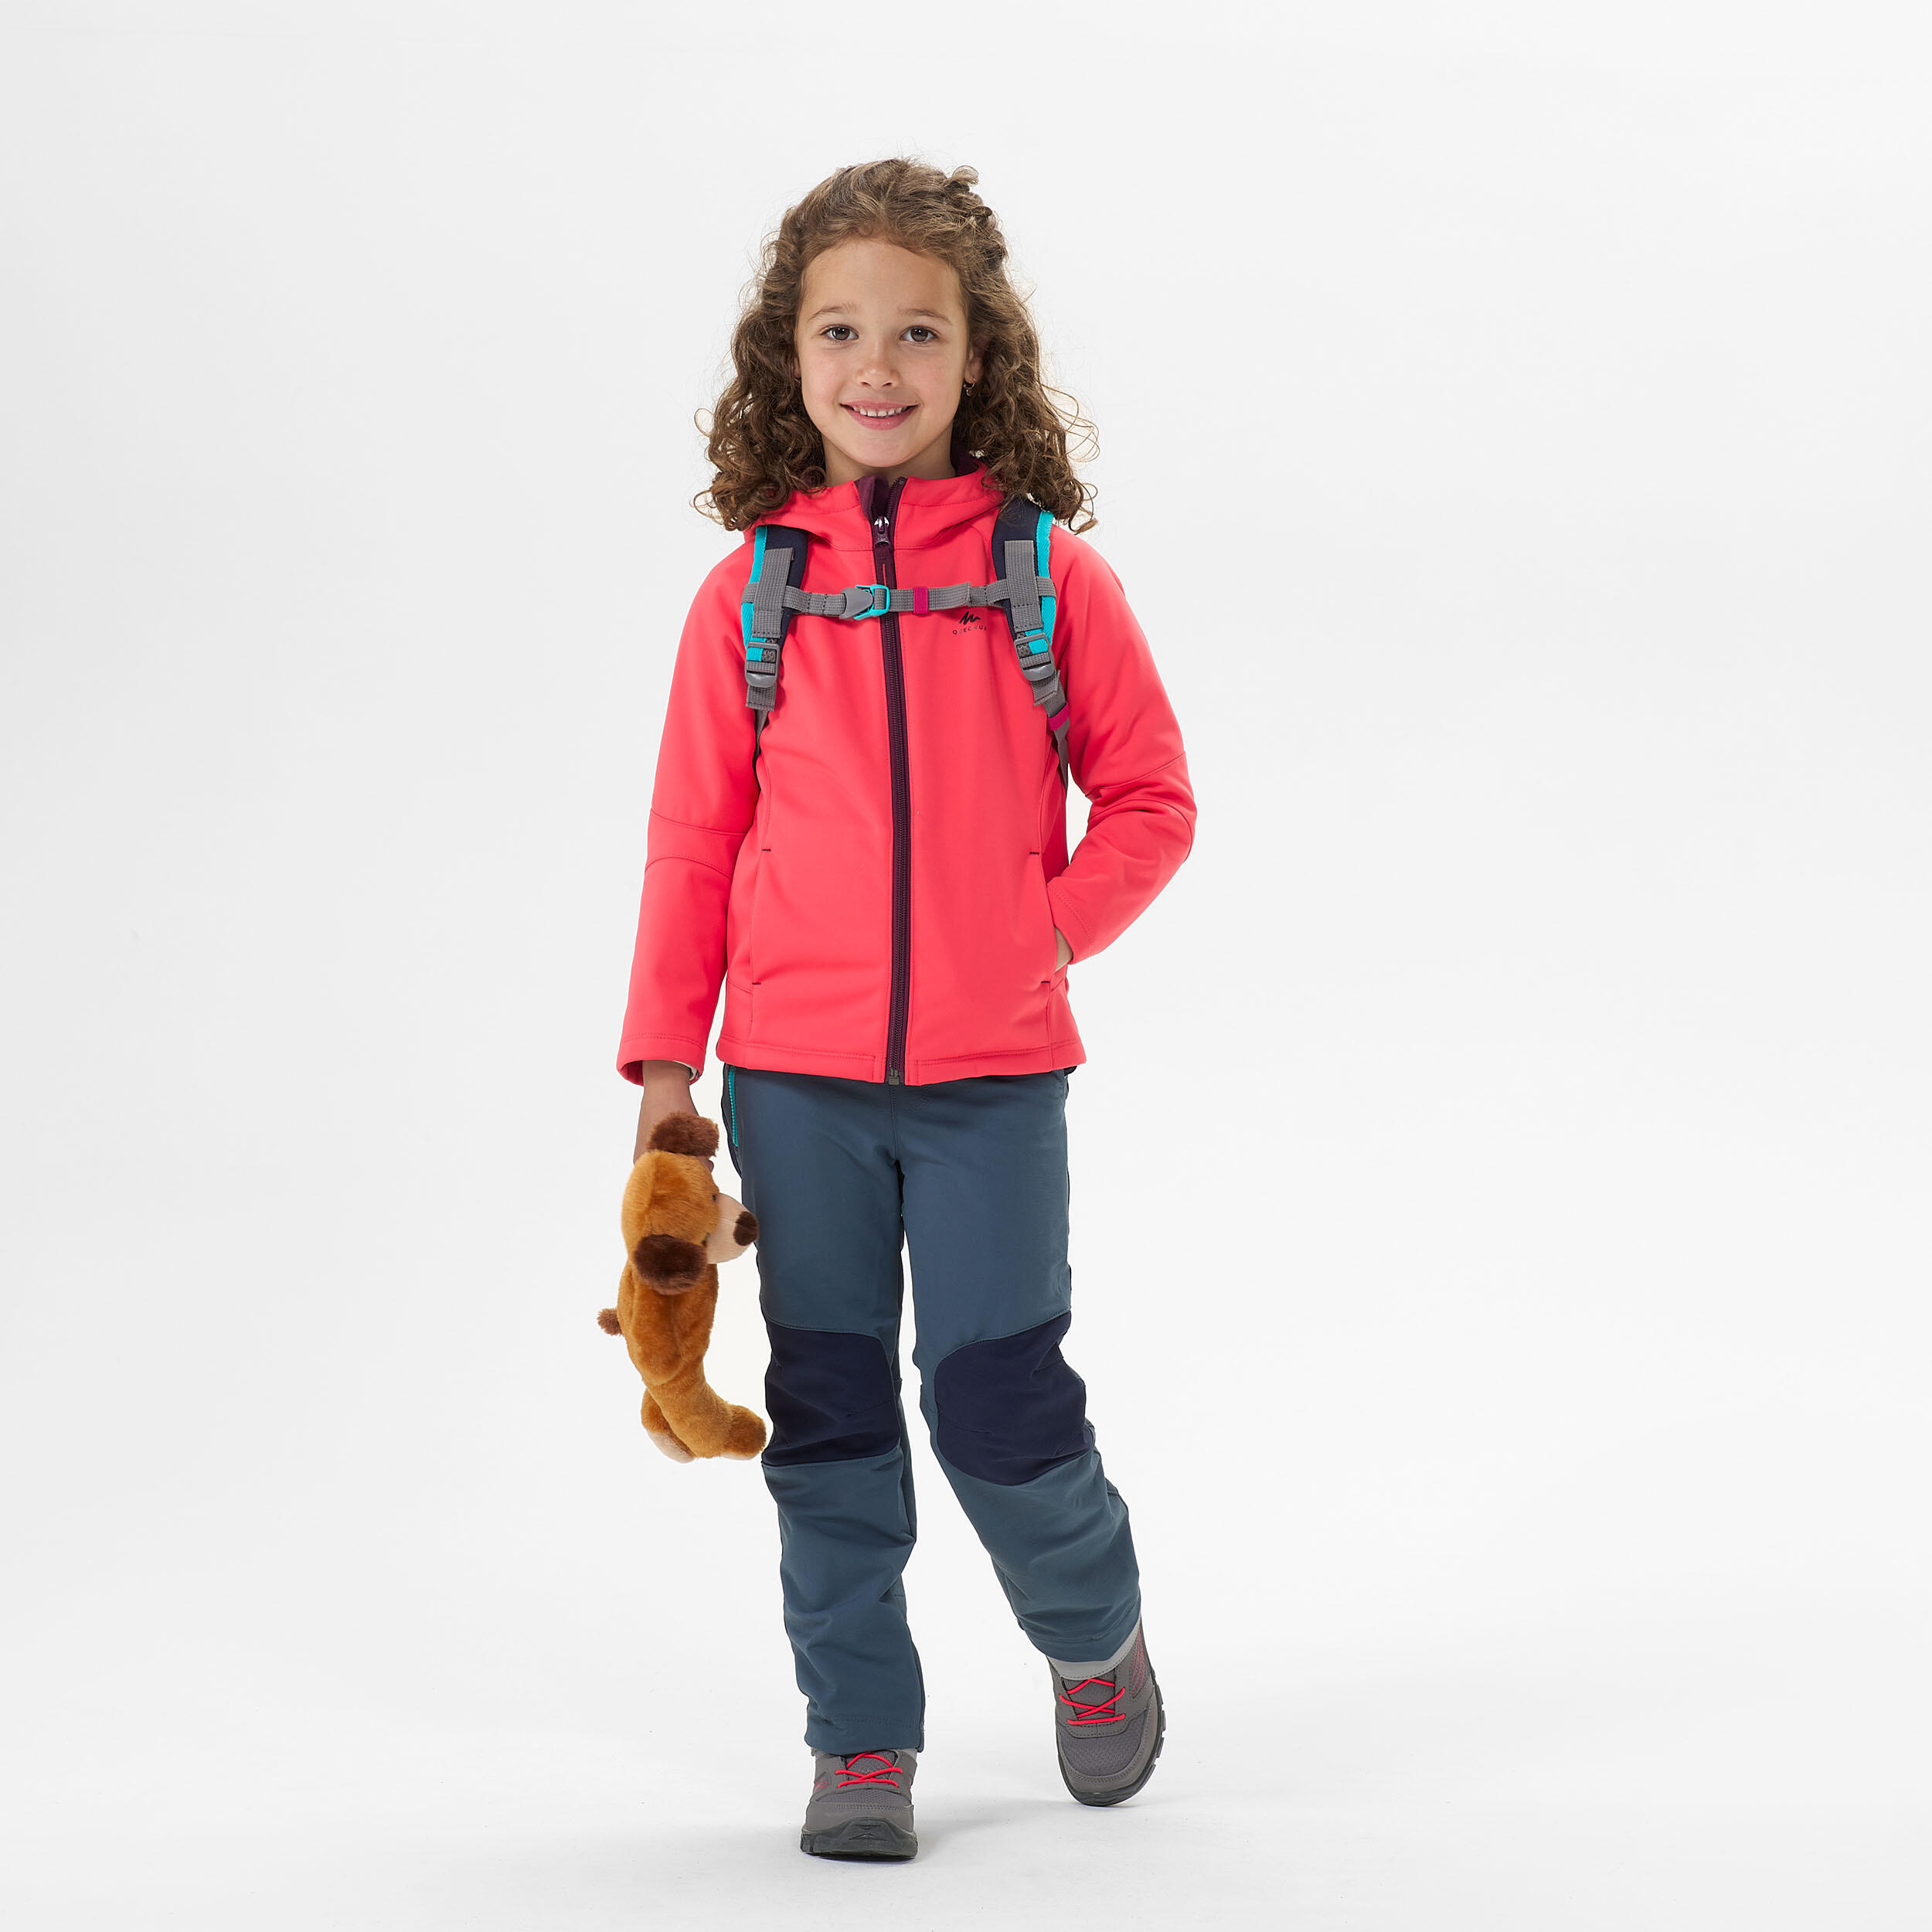 Kids 2-6 Years Hiking Softshell Jacket MH550 - pink  2/9